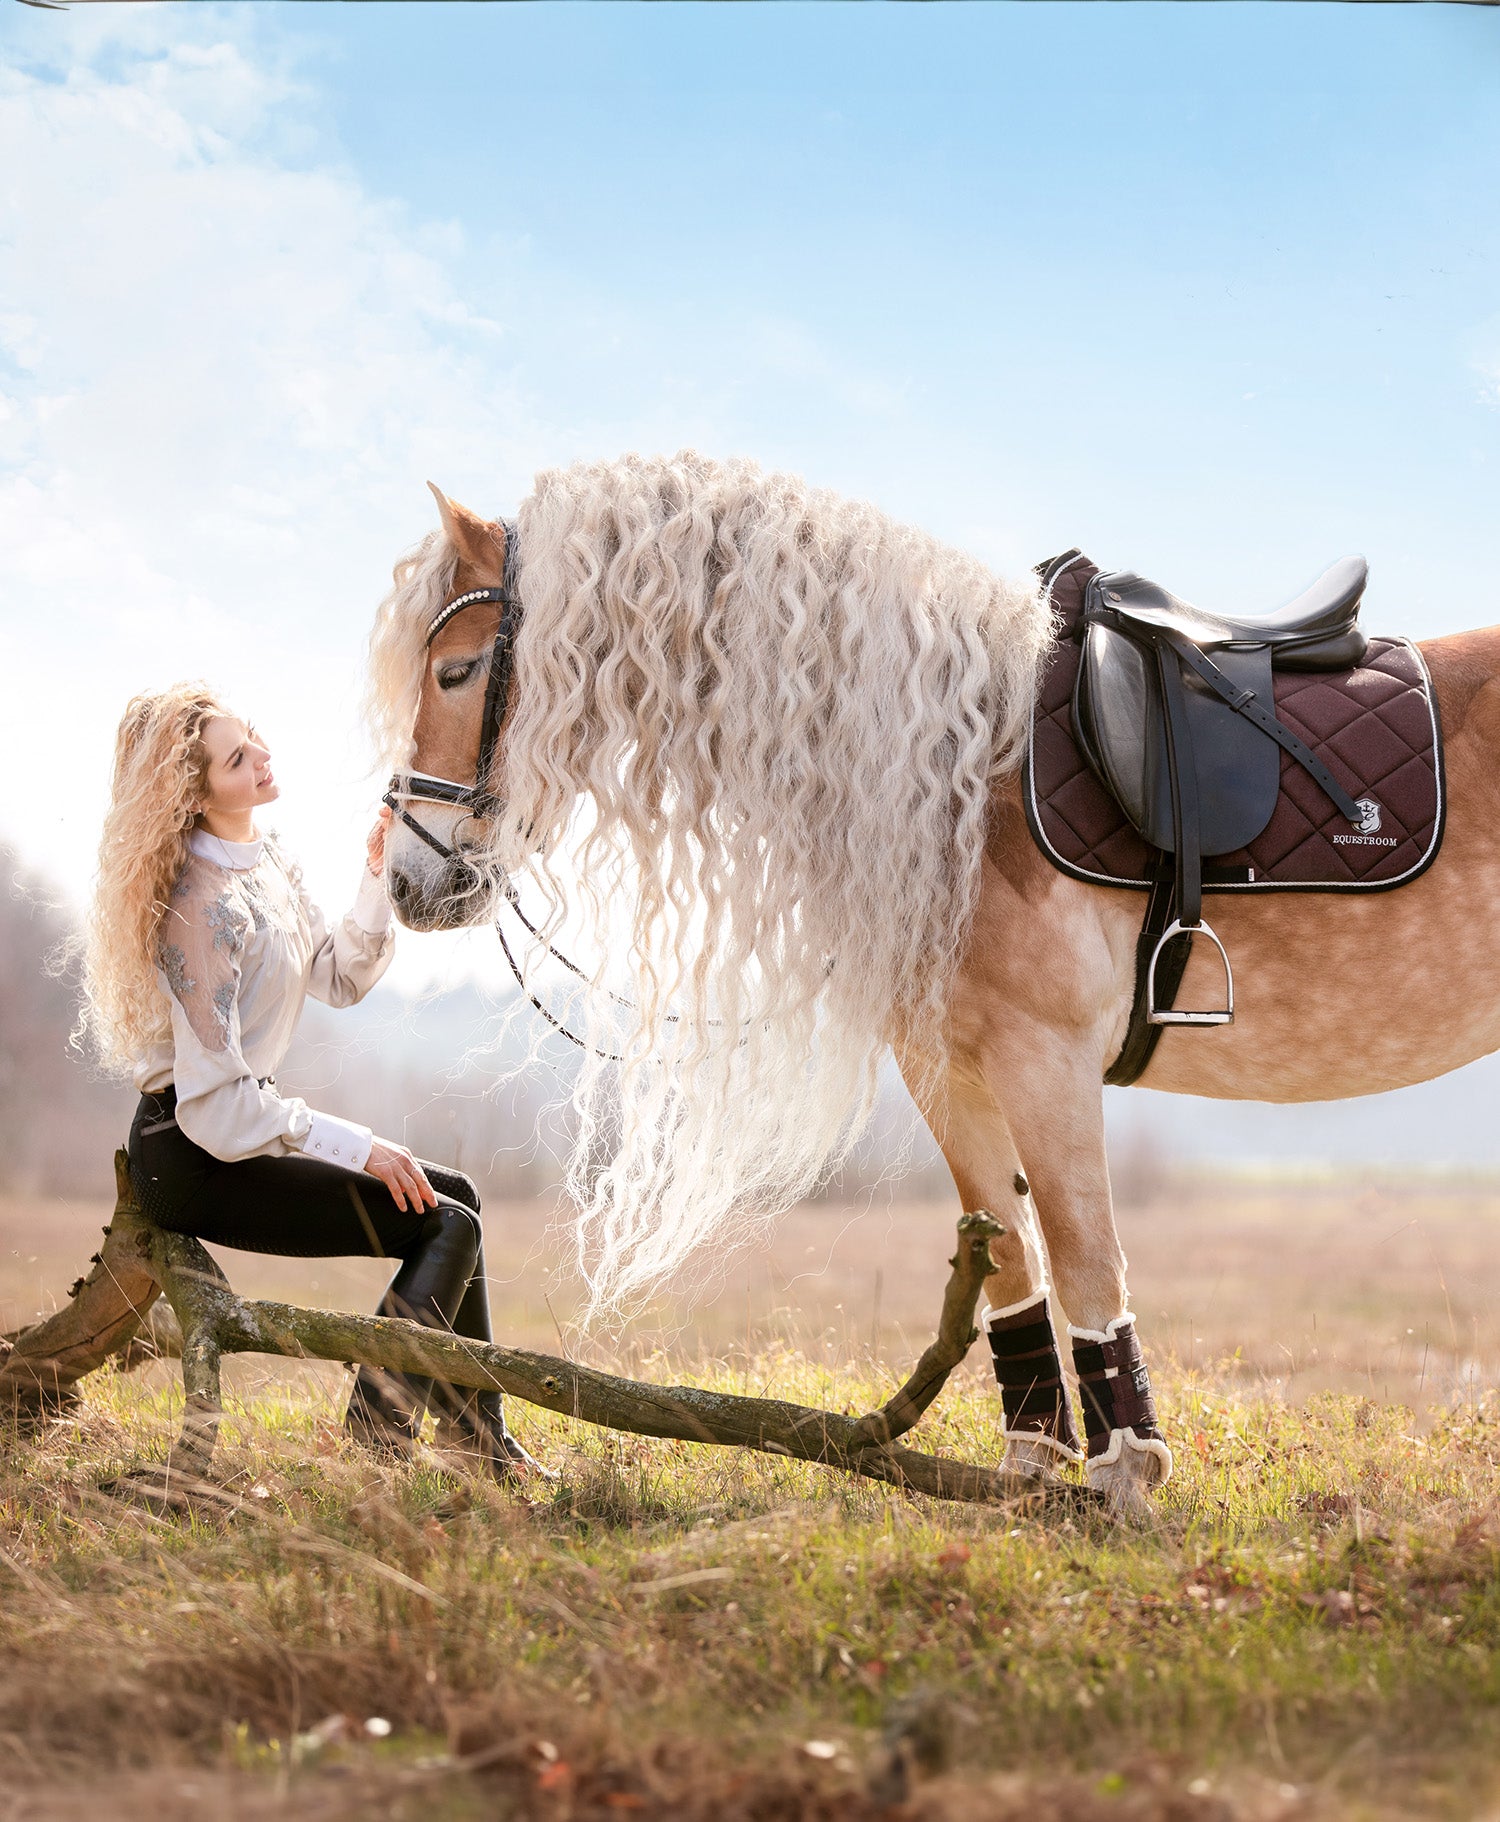 Online shop for Horse Tack, Riding Apparel, Equestrian Equipment